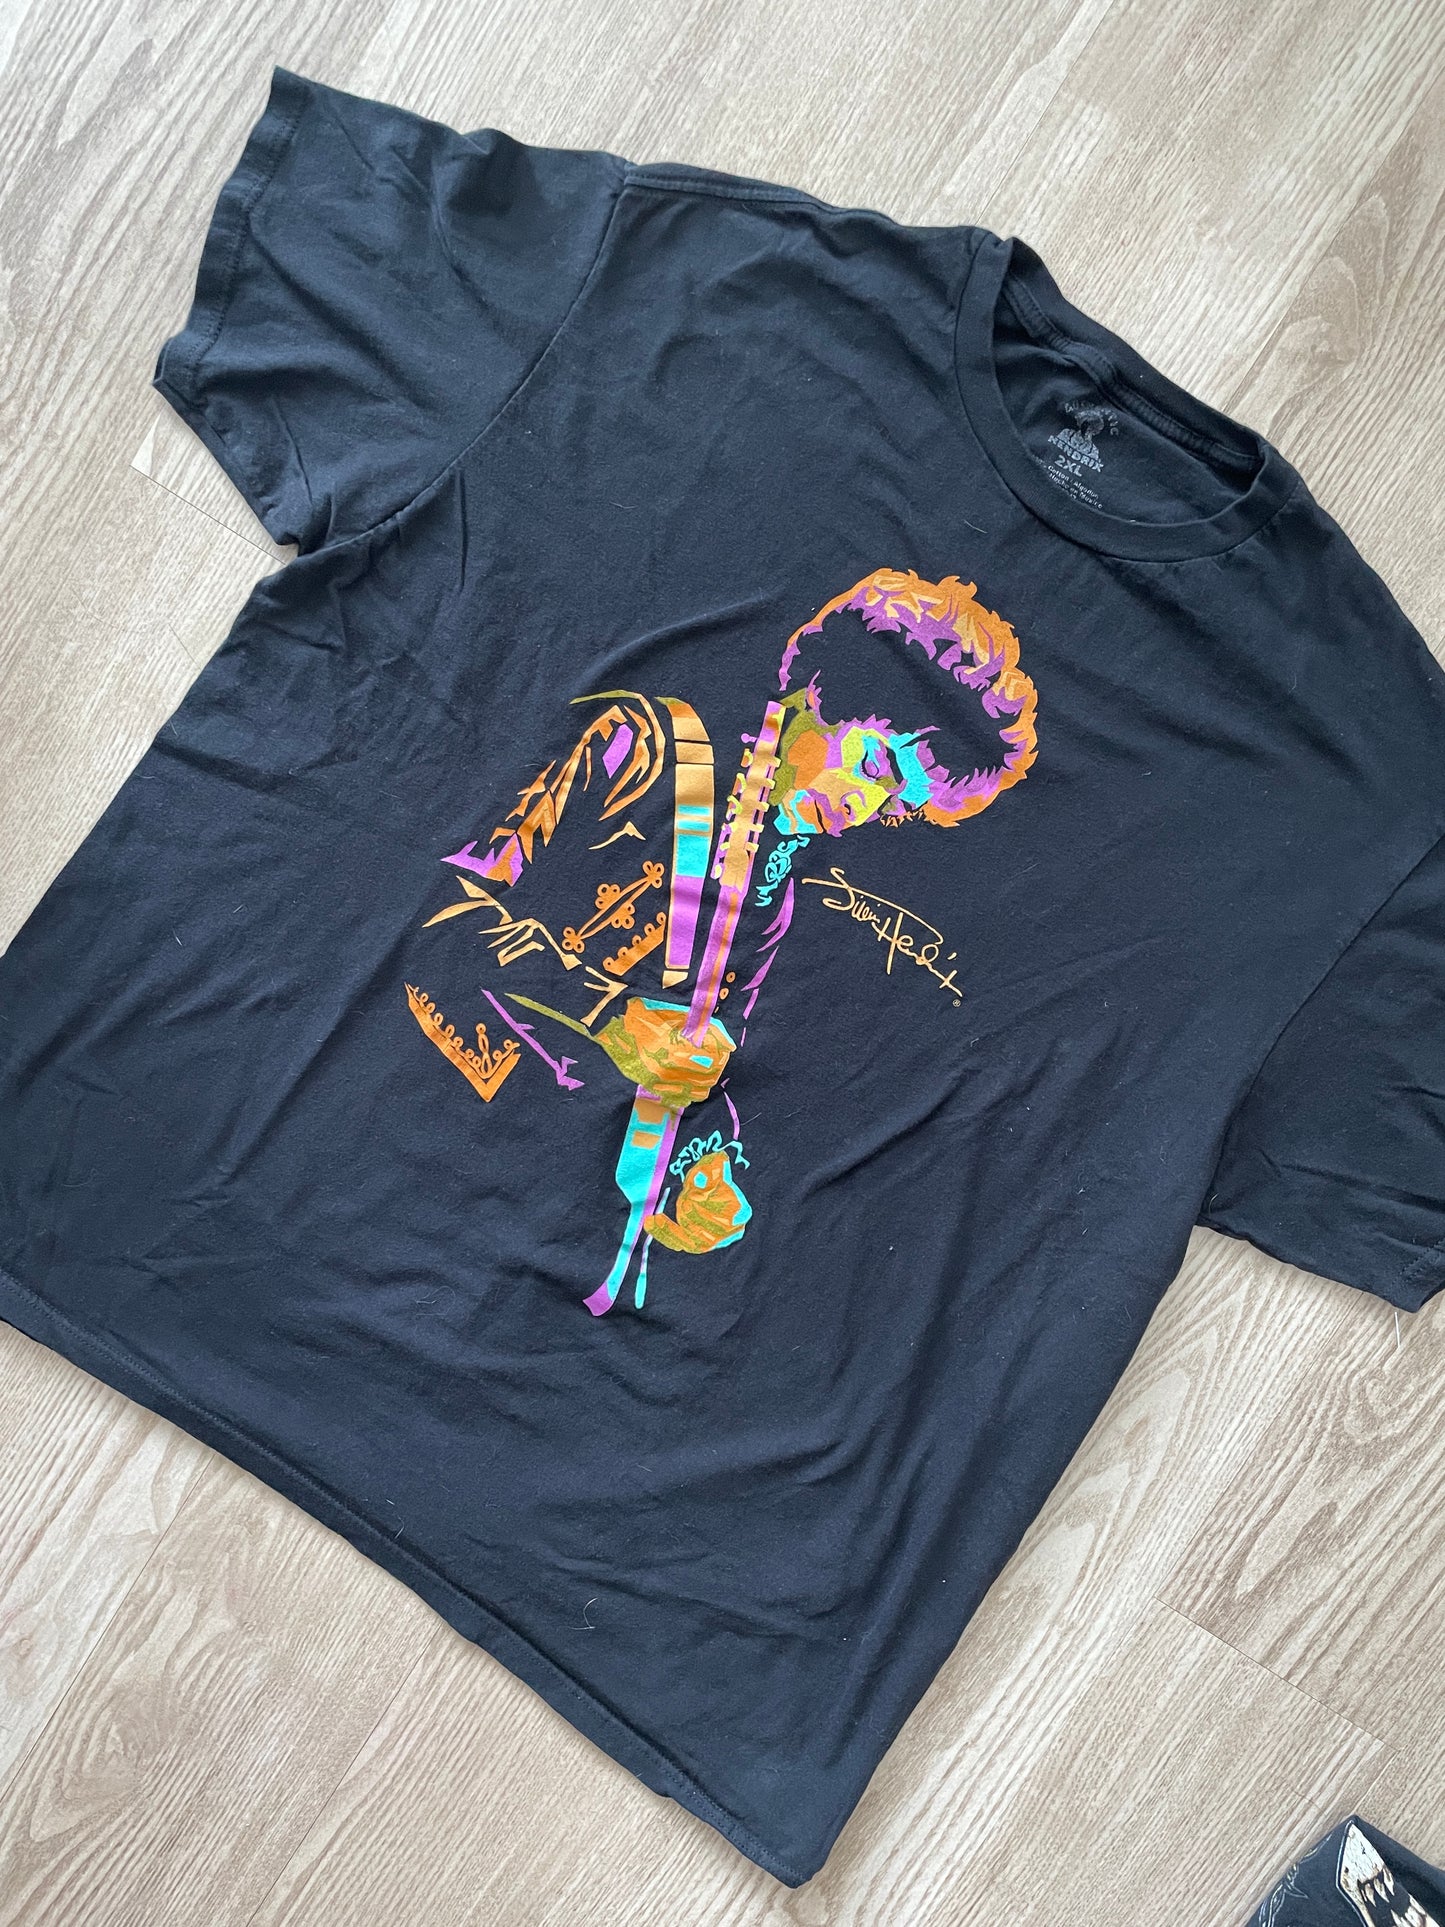 2XL Men's Jimi Hendrix Short Sleeve T-Shirt | READY TO TIE DYE